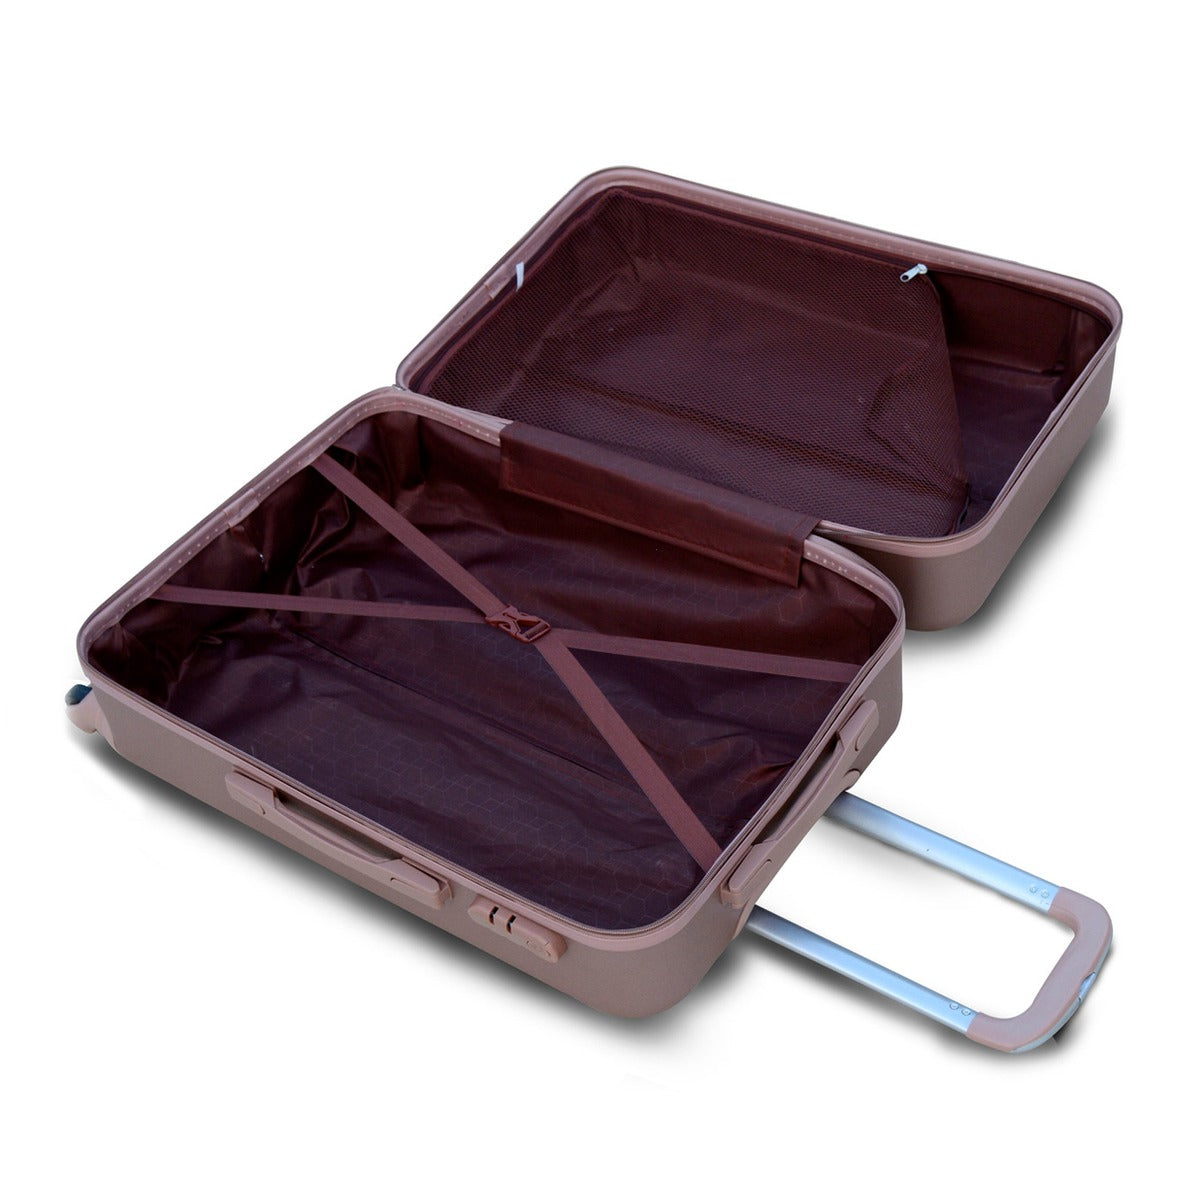 28" Rose Gold Colour Diamond Cut ABS Luggage Lightweight Hard Case Trolley Bag Zaappy.com